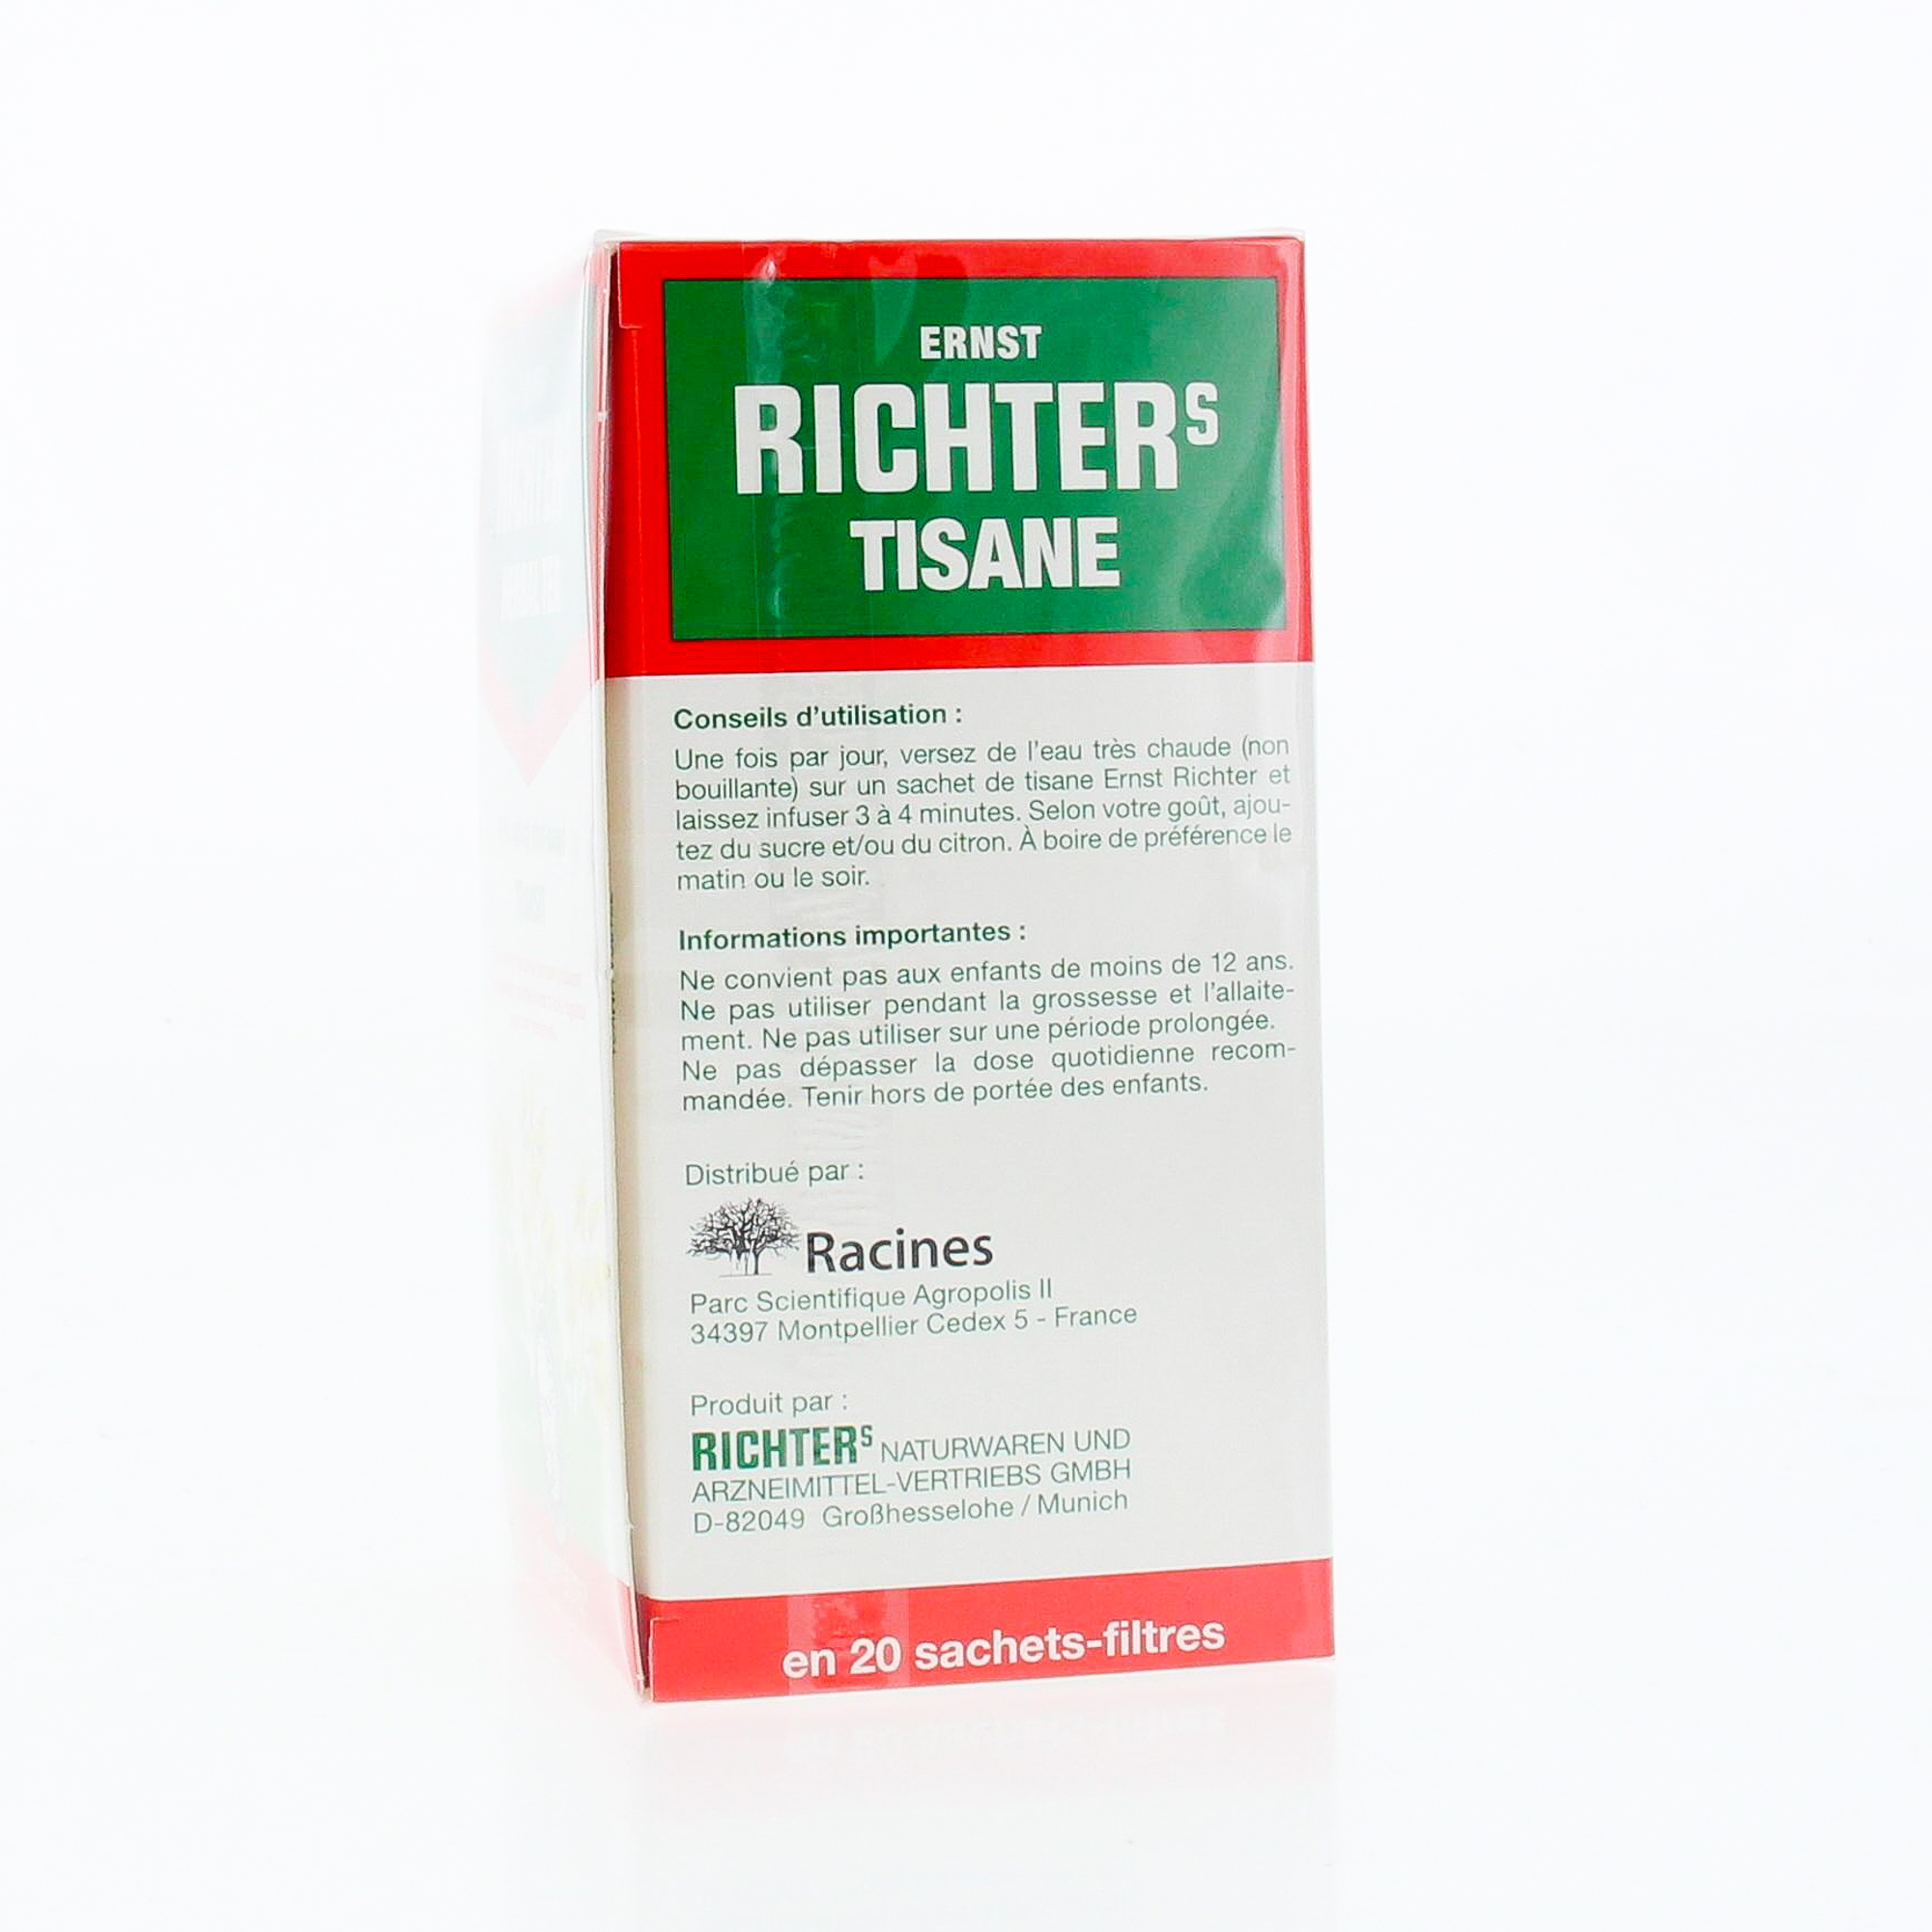 RICHTER'S Tisane transit sachets filtres x 20 - Pharmacie Prado Mermoz